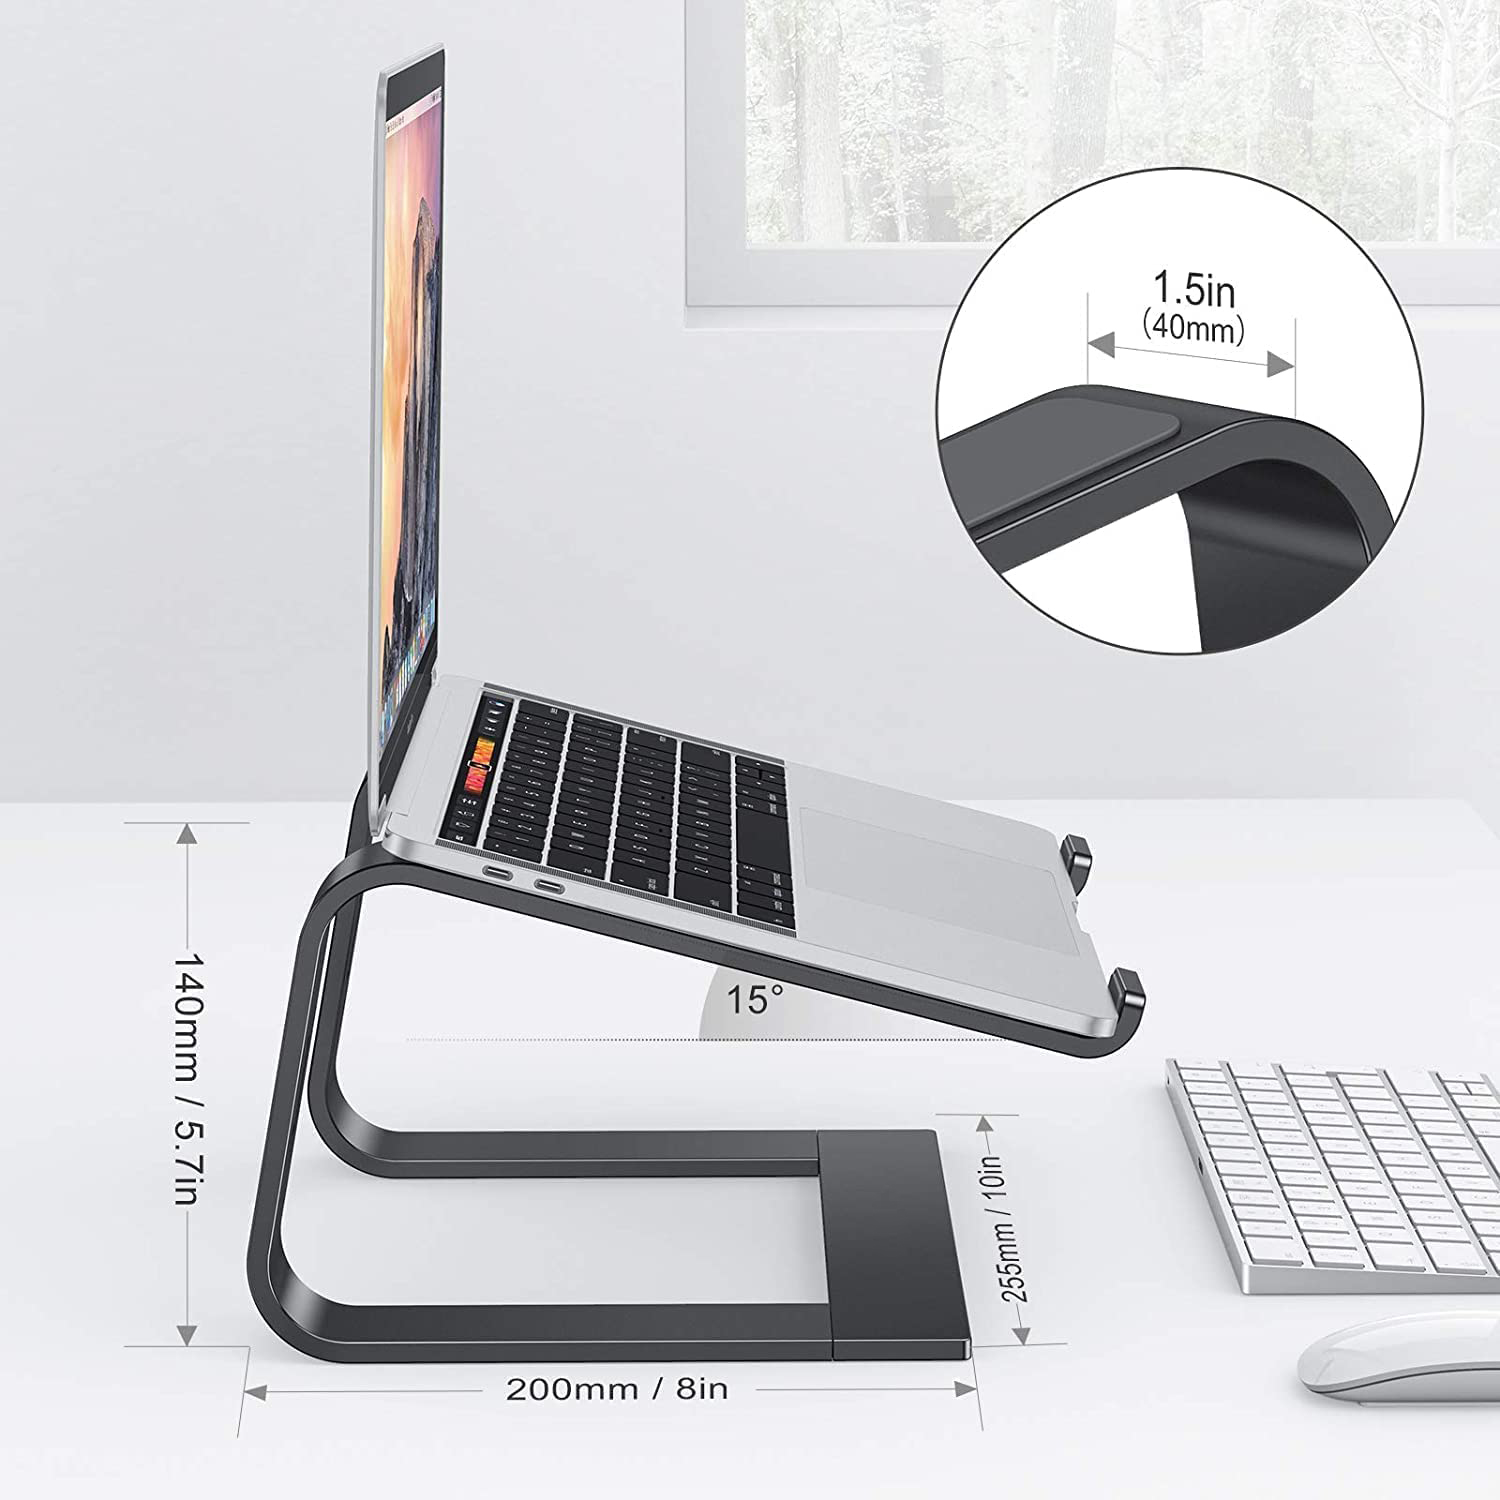 Laptop-Accessories-FRUITFUL-Folding-Laptop-Stand-Holder-Ergonomic-Aluminum-Computer-Stand-Labtop-Riser-Detachable-Tablet-Holder-Desktop-Mount-for-10-15-6-Laptop-48